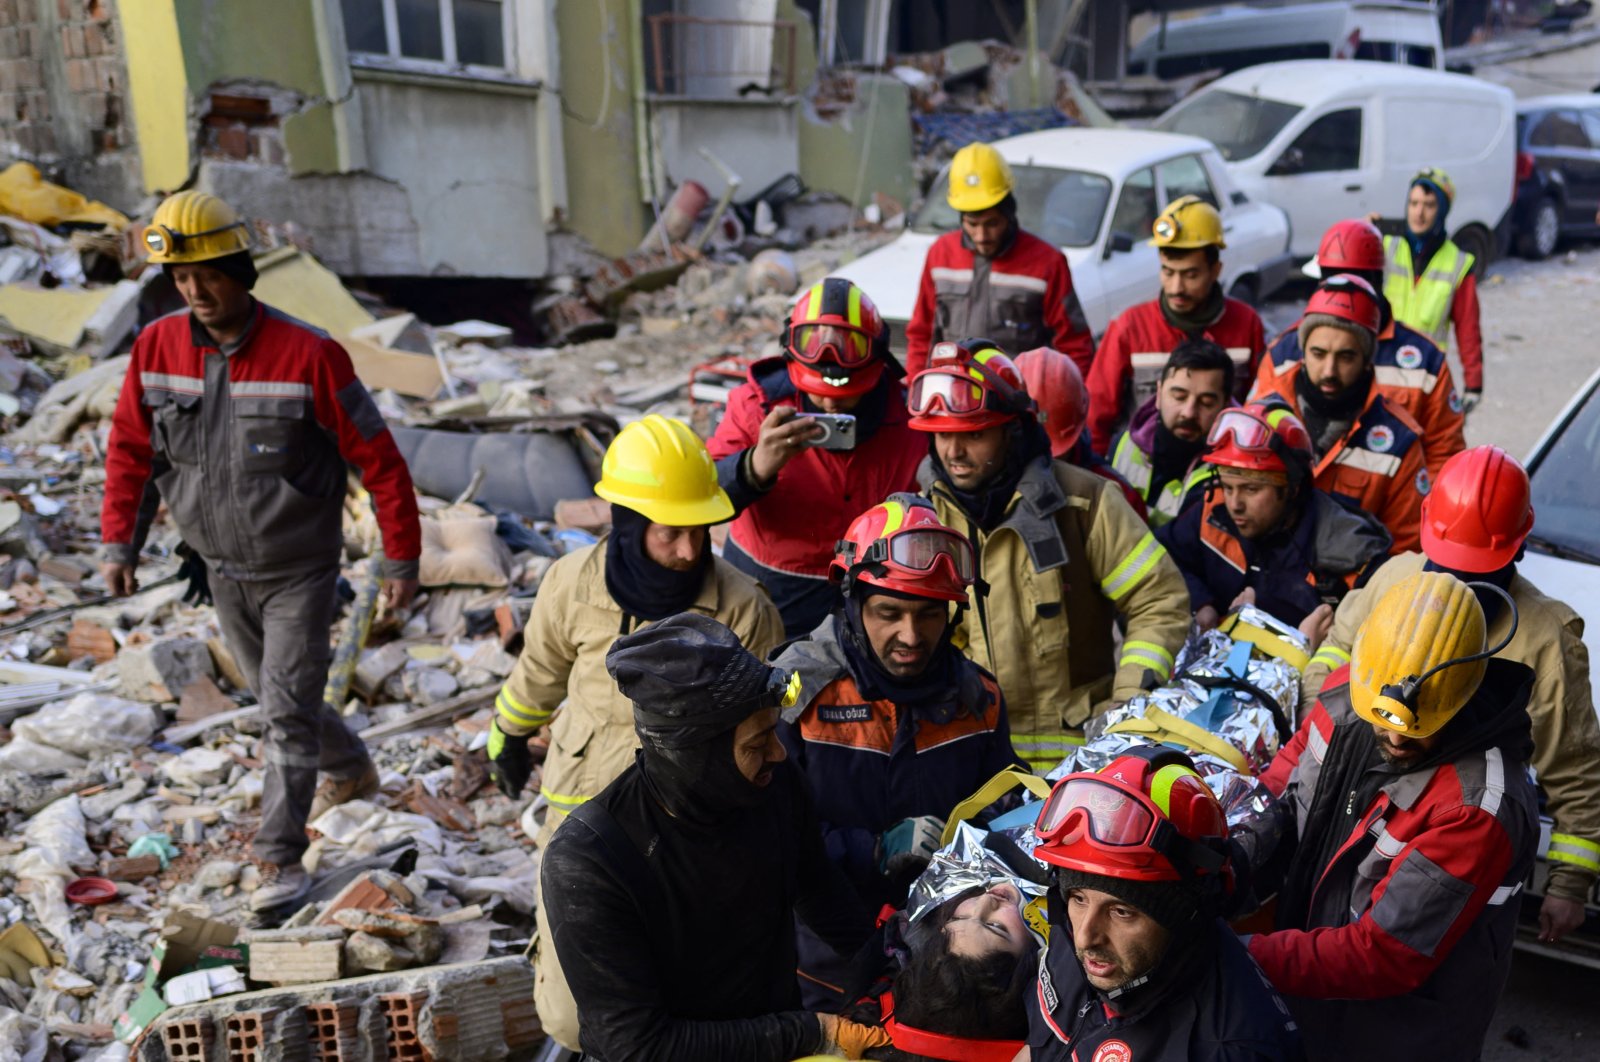 Pengungsi di Türkiye menjadi sasaran permusuhan setelah gempa bumi